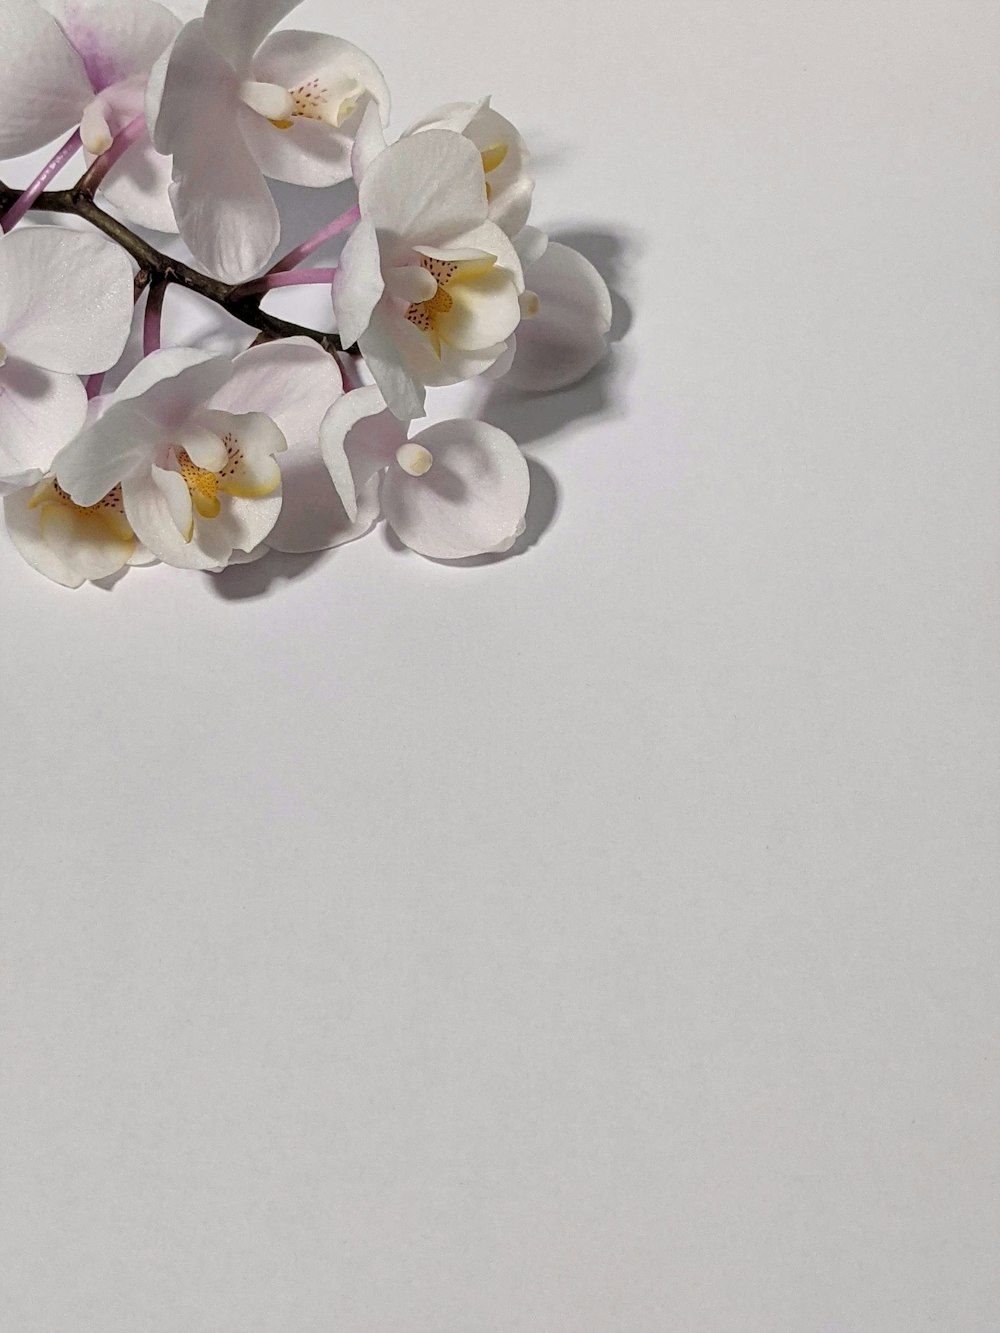 orquídeas brancas da mariposa na superfície branca